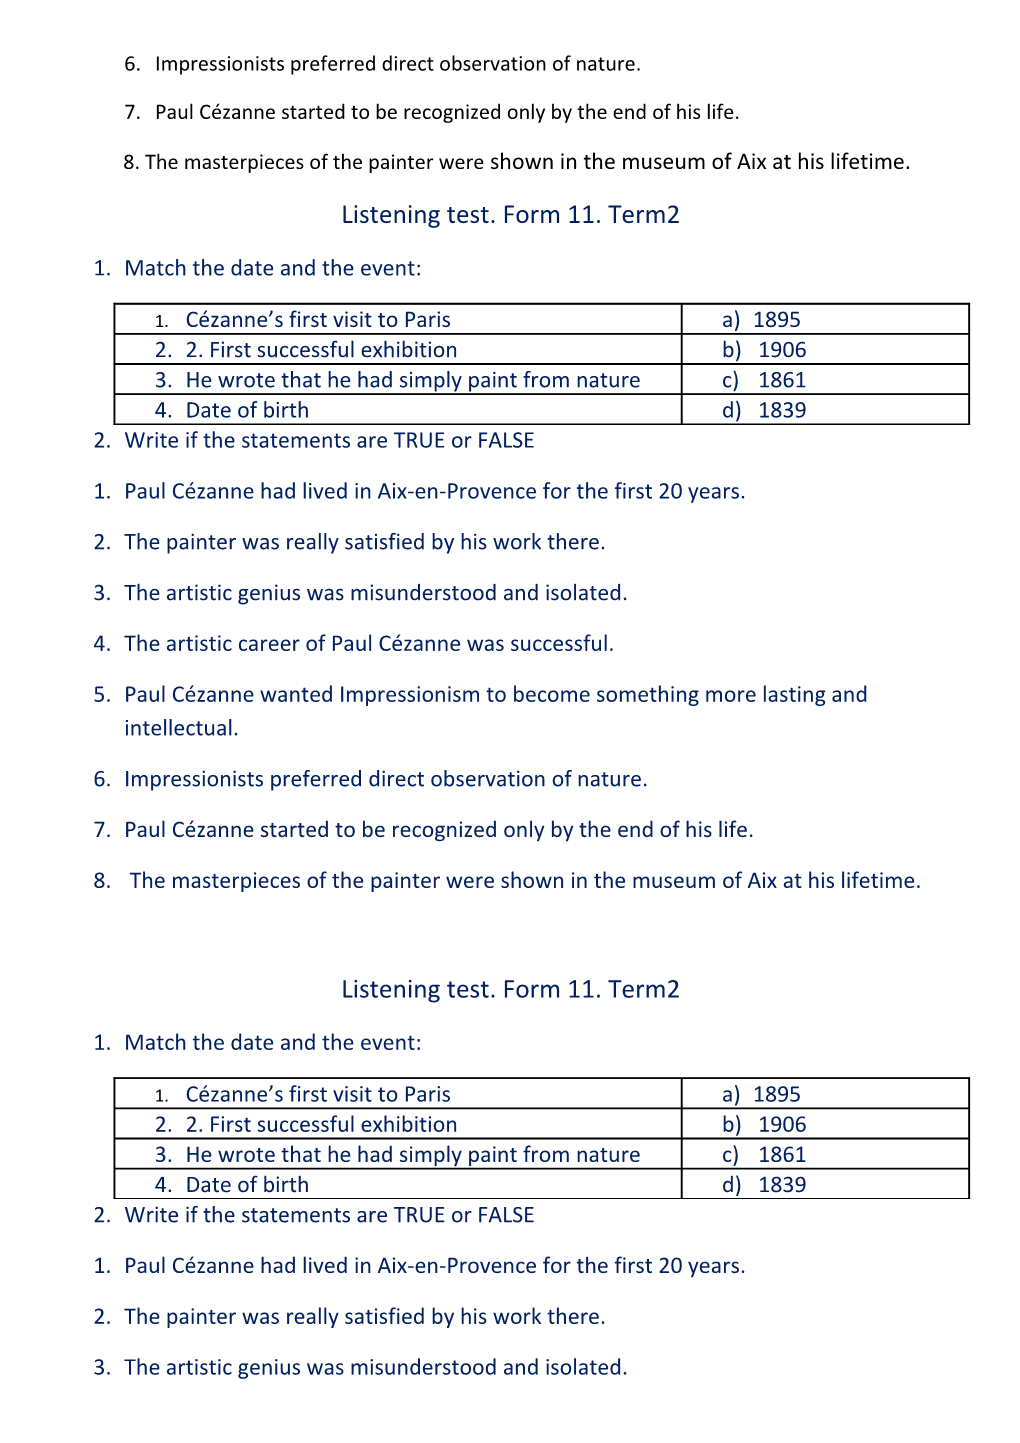 Listening Test. Form 11. Term2